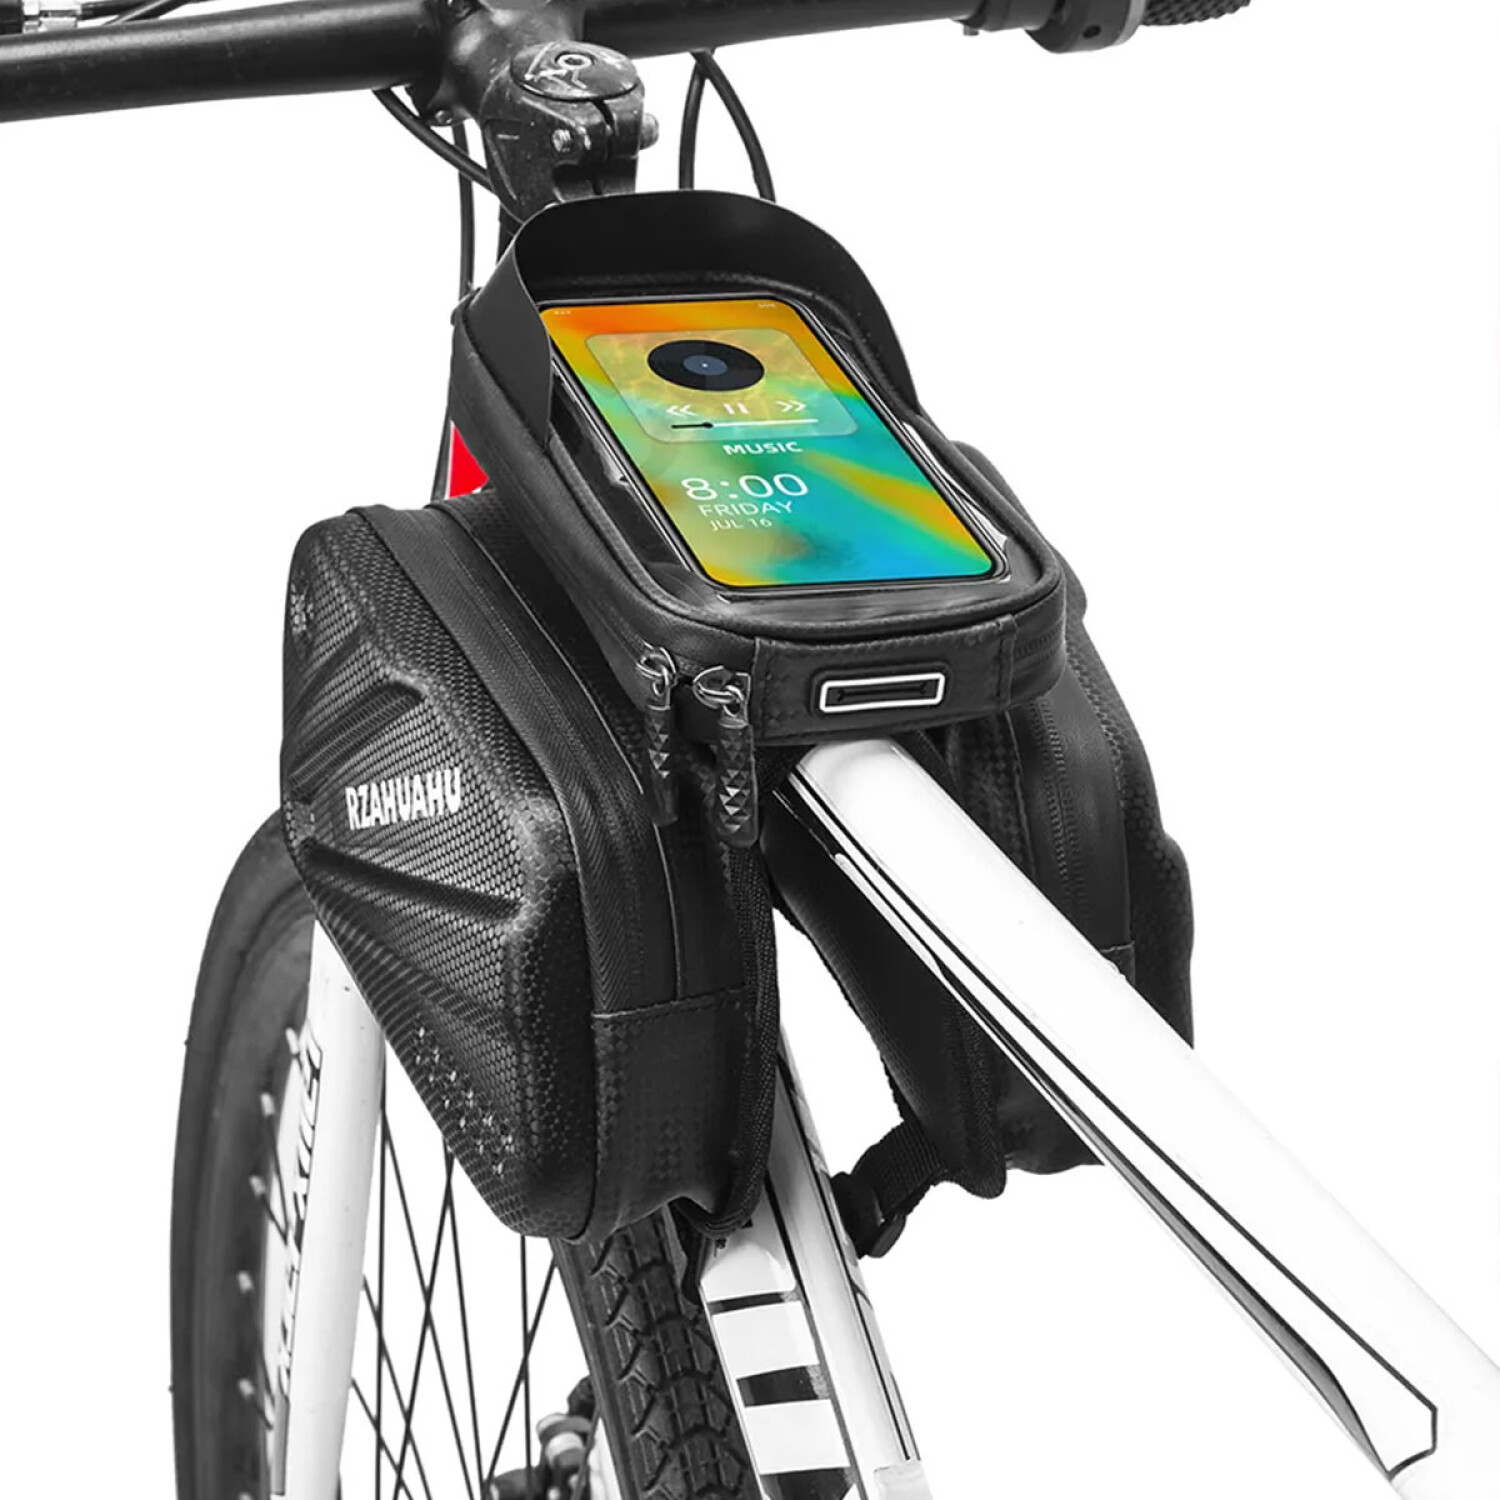 Soporte Porta Celular Bicicleta Bolso Impermeable Bici